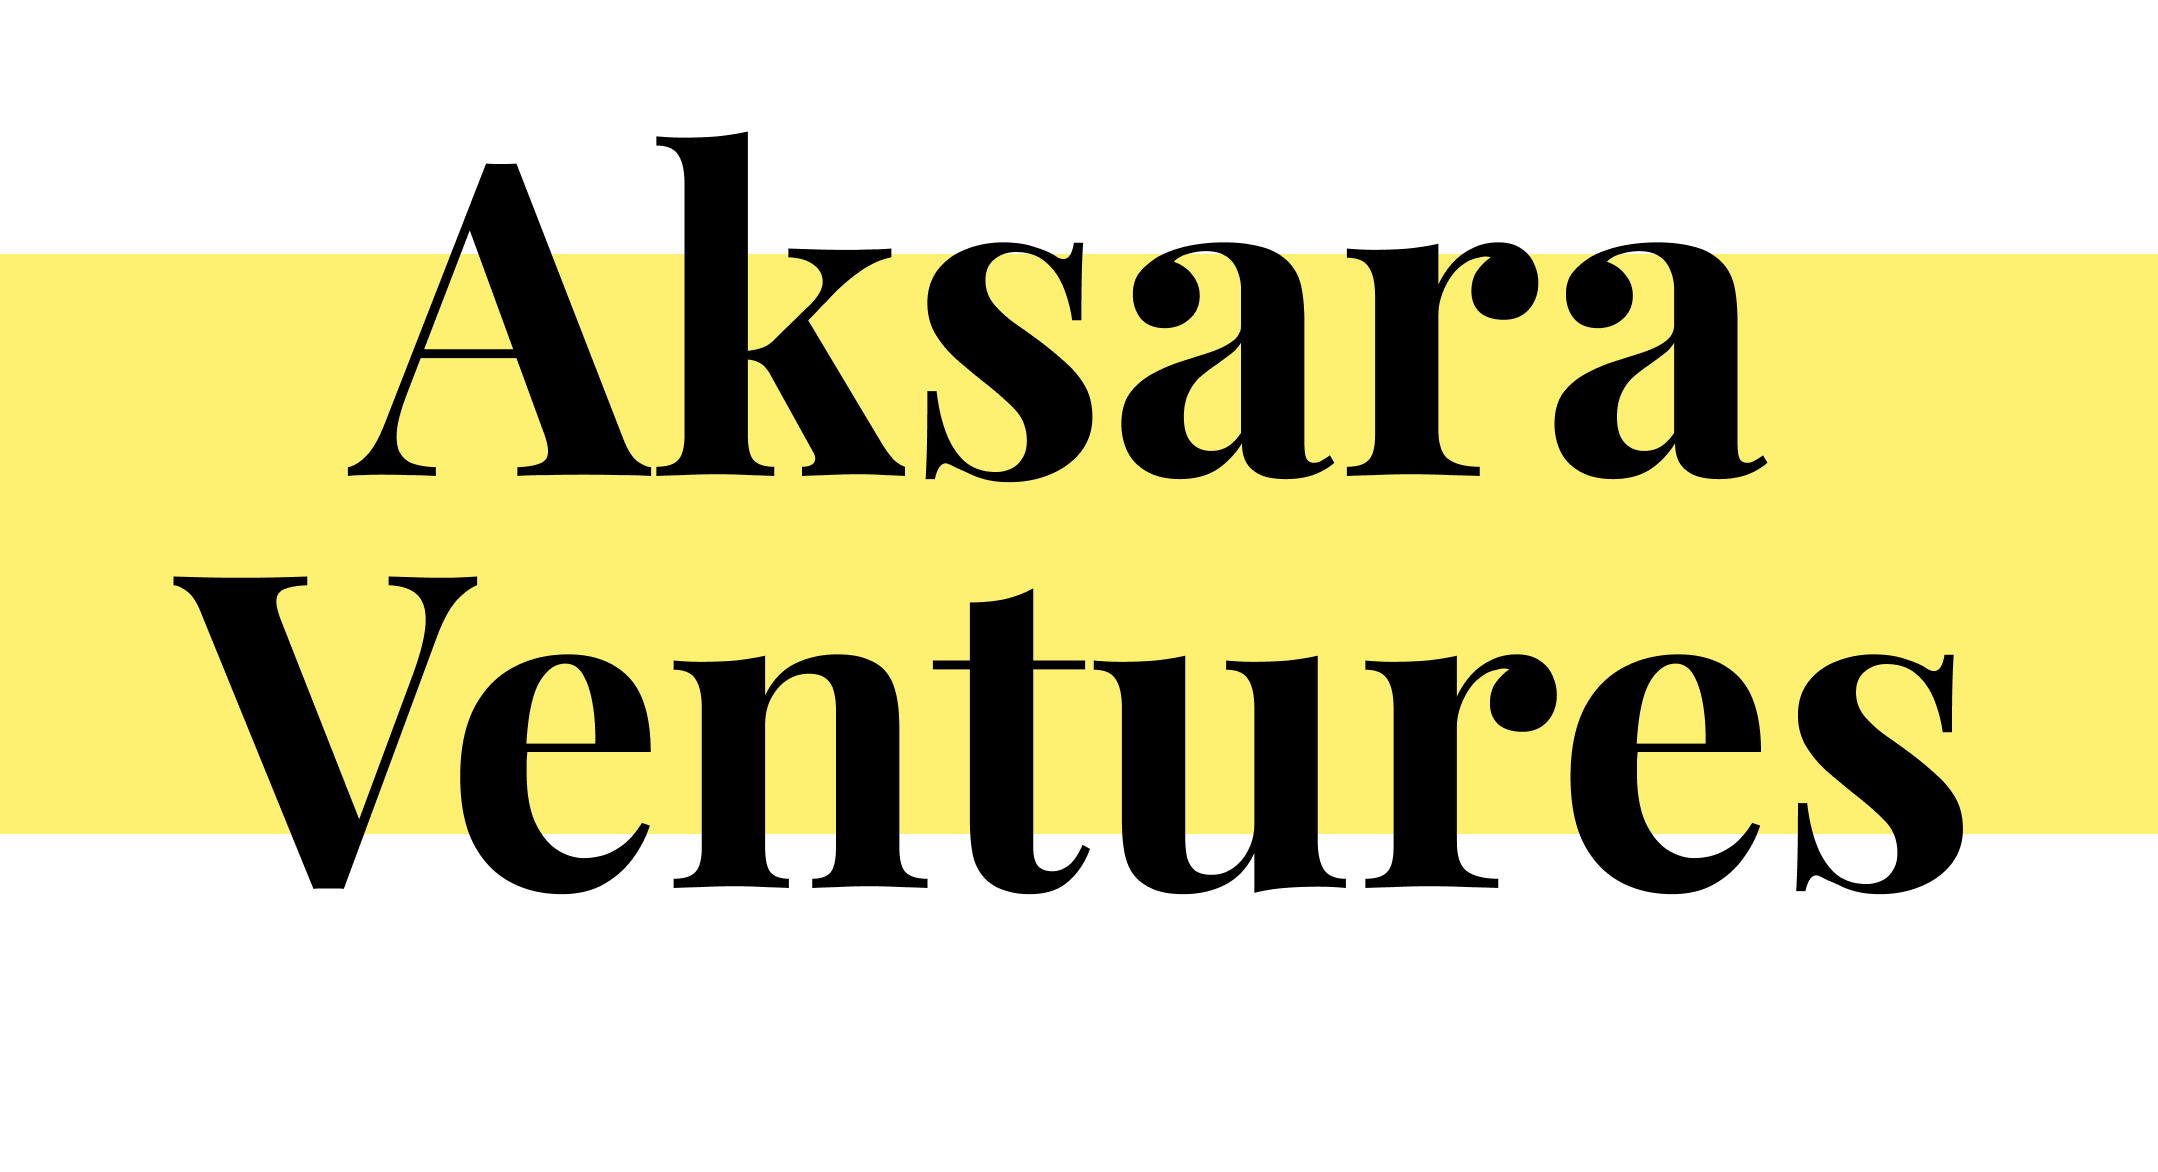 Aksara logo